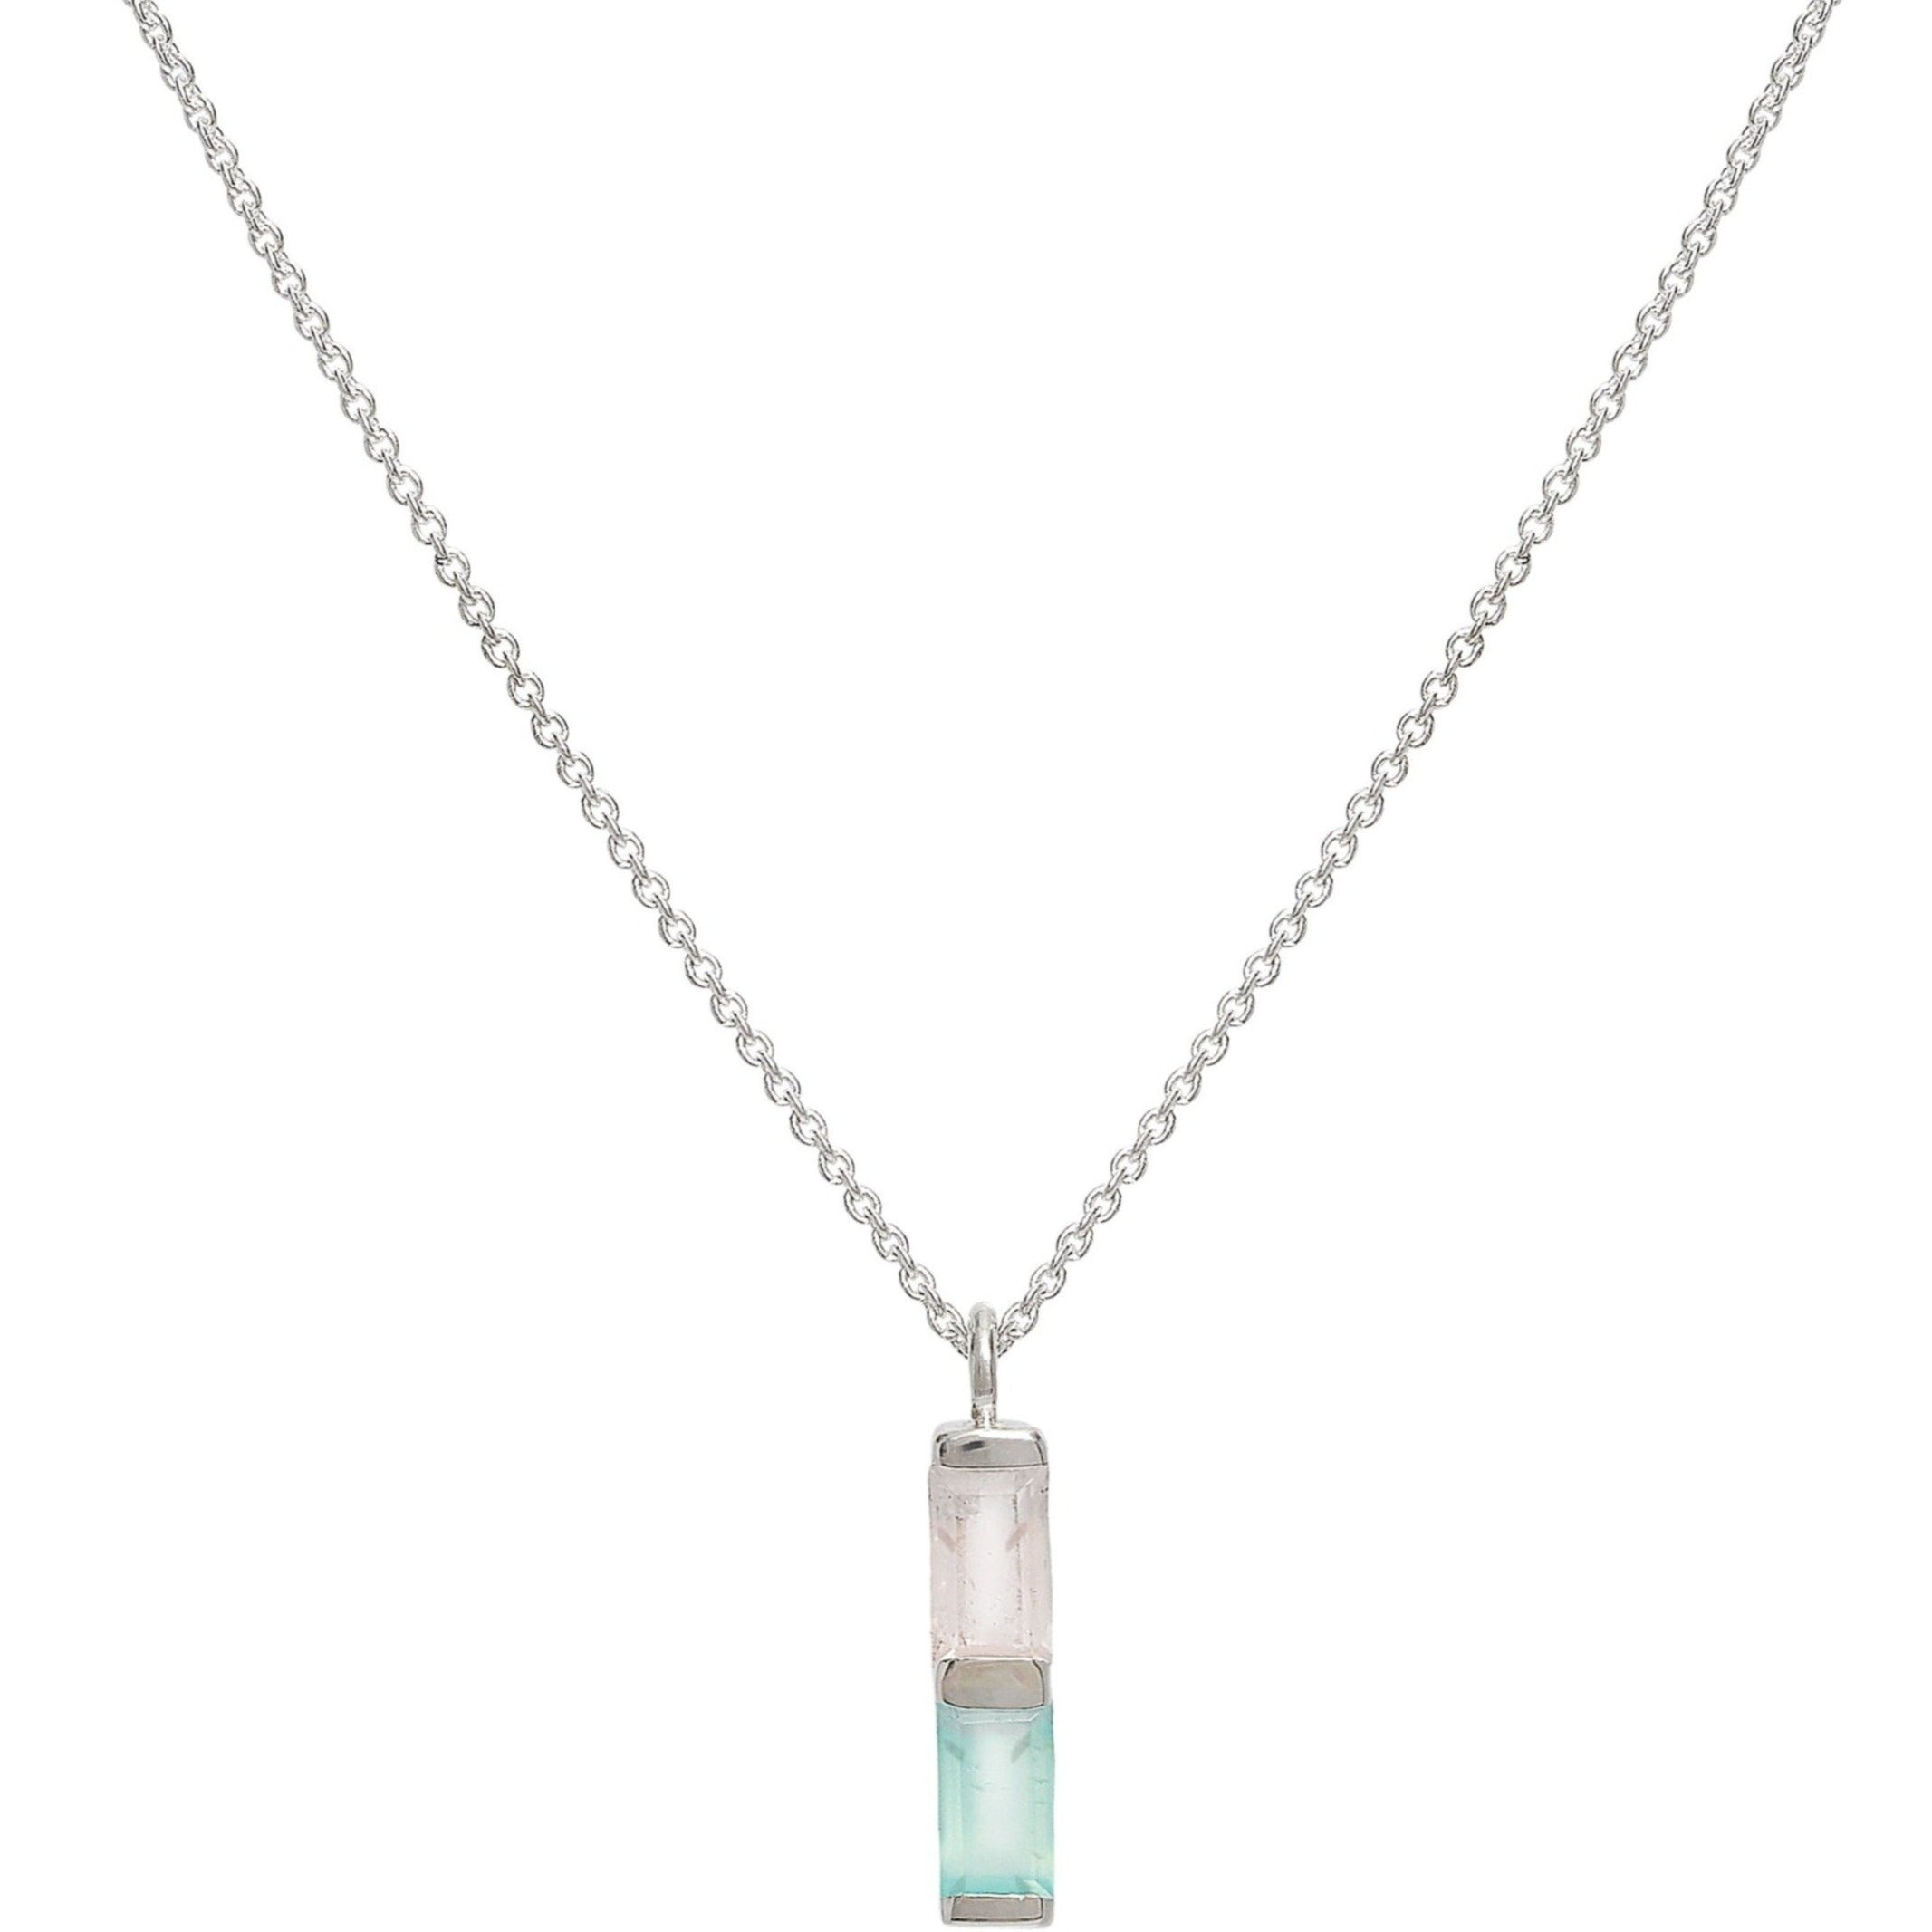 gemstone silver necklace pendant rose quartz